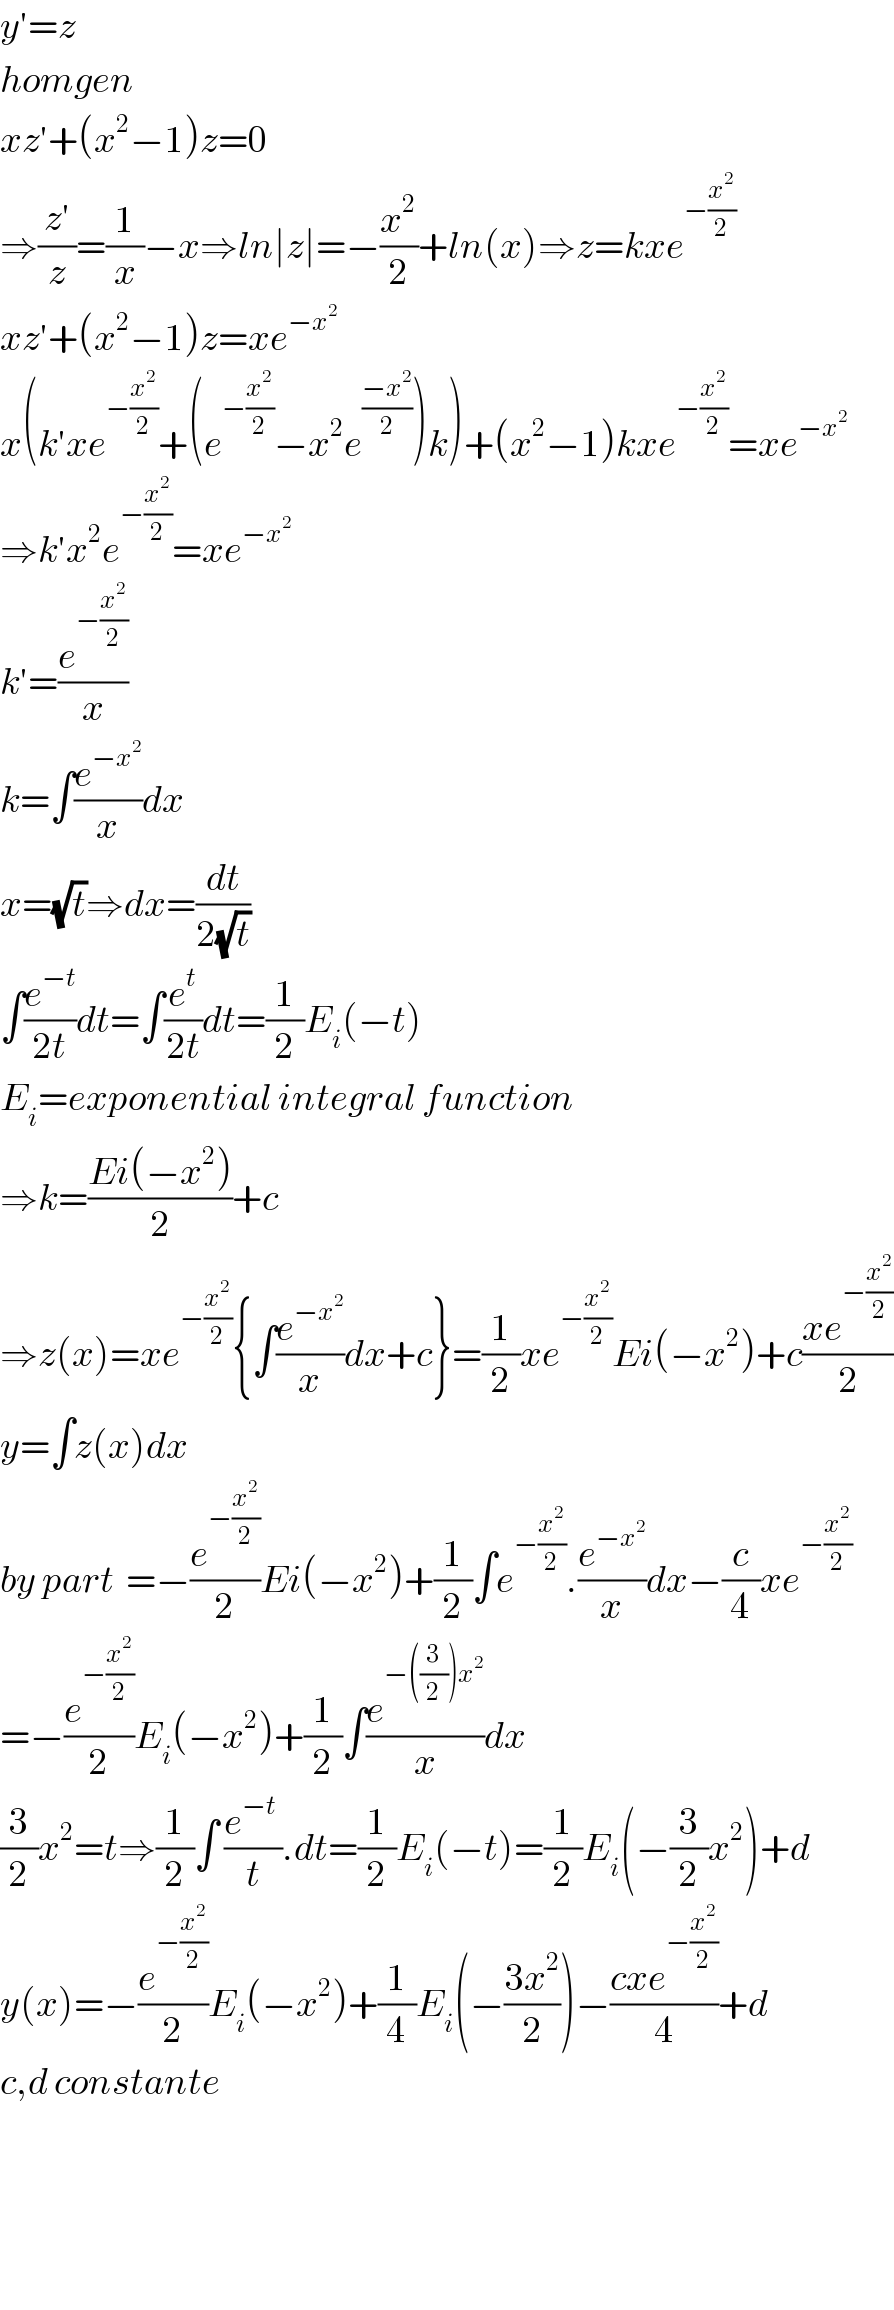 y′=z  homgen  xz′+(x^2 −1)z=0  ⇒((z′)/z)=(1/x)−x⇒ln∣z∣=−(x^2 /2)+ln(x)⇒z=kxe^(−(x^2 /2))   xz′+(x^2 −1)z=xe^(−x^2 )   x(k′xe^(−(x^2 /2)) +(e^(−(x^2 /2)) −x^2 e^((−x^2 )/2) )k)+(x^2 −1)kxe^(−(x^2 /2)) =xe^(−x^2 )   ⇒k′x^2 e^(−(x^2 /2)) =xe^(−x^2 )   k′=(e^(−(x^2 /2)) /x)  k=∫(e^(−x^2 ) /x)dx  x=(√t)⇒dx=(dt/(2(√t)))  ∫(e^(−t) /(2t))dt=∫(e^t /(2t))dt=(1/2)E_i (−t)  E_i =exponential integral function  ⇒k=((Ei(−x^2 ))/2)+c  ⇒z(x)=xe^(−(x^2 /2)) {∫(e^(−x^2 ) /x)dx+c}=(1/2)xe^(−(x^2 /2)) Ei(−x^2 )+c((xe^(−(x^2 /2)) )/2)  y=∫z(x)dx  by part  =−(e^(−(x^2 /2)) /2)Ei(−x^2 )+(1/2)∫e^(−(x^2 /2)) .(e^(−x^2 ) /x)dx−(c/4)xe^(−(x^2 /2))   =−(e^(−(x^2 /2)) /2)E_i (−x^2 )+(1/2)∫(e^(−((3/2))x^2 ) /x)dx  (3/2)x^2 =t⇒(1/2)∫ ((e^(−t)  )/t).dt=(1/2)E_i (−t)=(1/2)E_i (−(3/2)x^2 )+d  y(x)=−(e^(−(x^2 /2)) /2)E_i (−x^2 )+(1/4)E_i (−((3x^2 )/2))−((cxe^(−(x^2 /2)) )/4)+d  c,d constante        